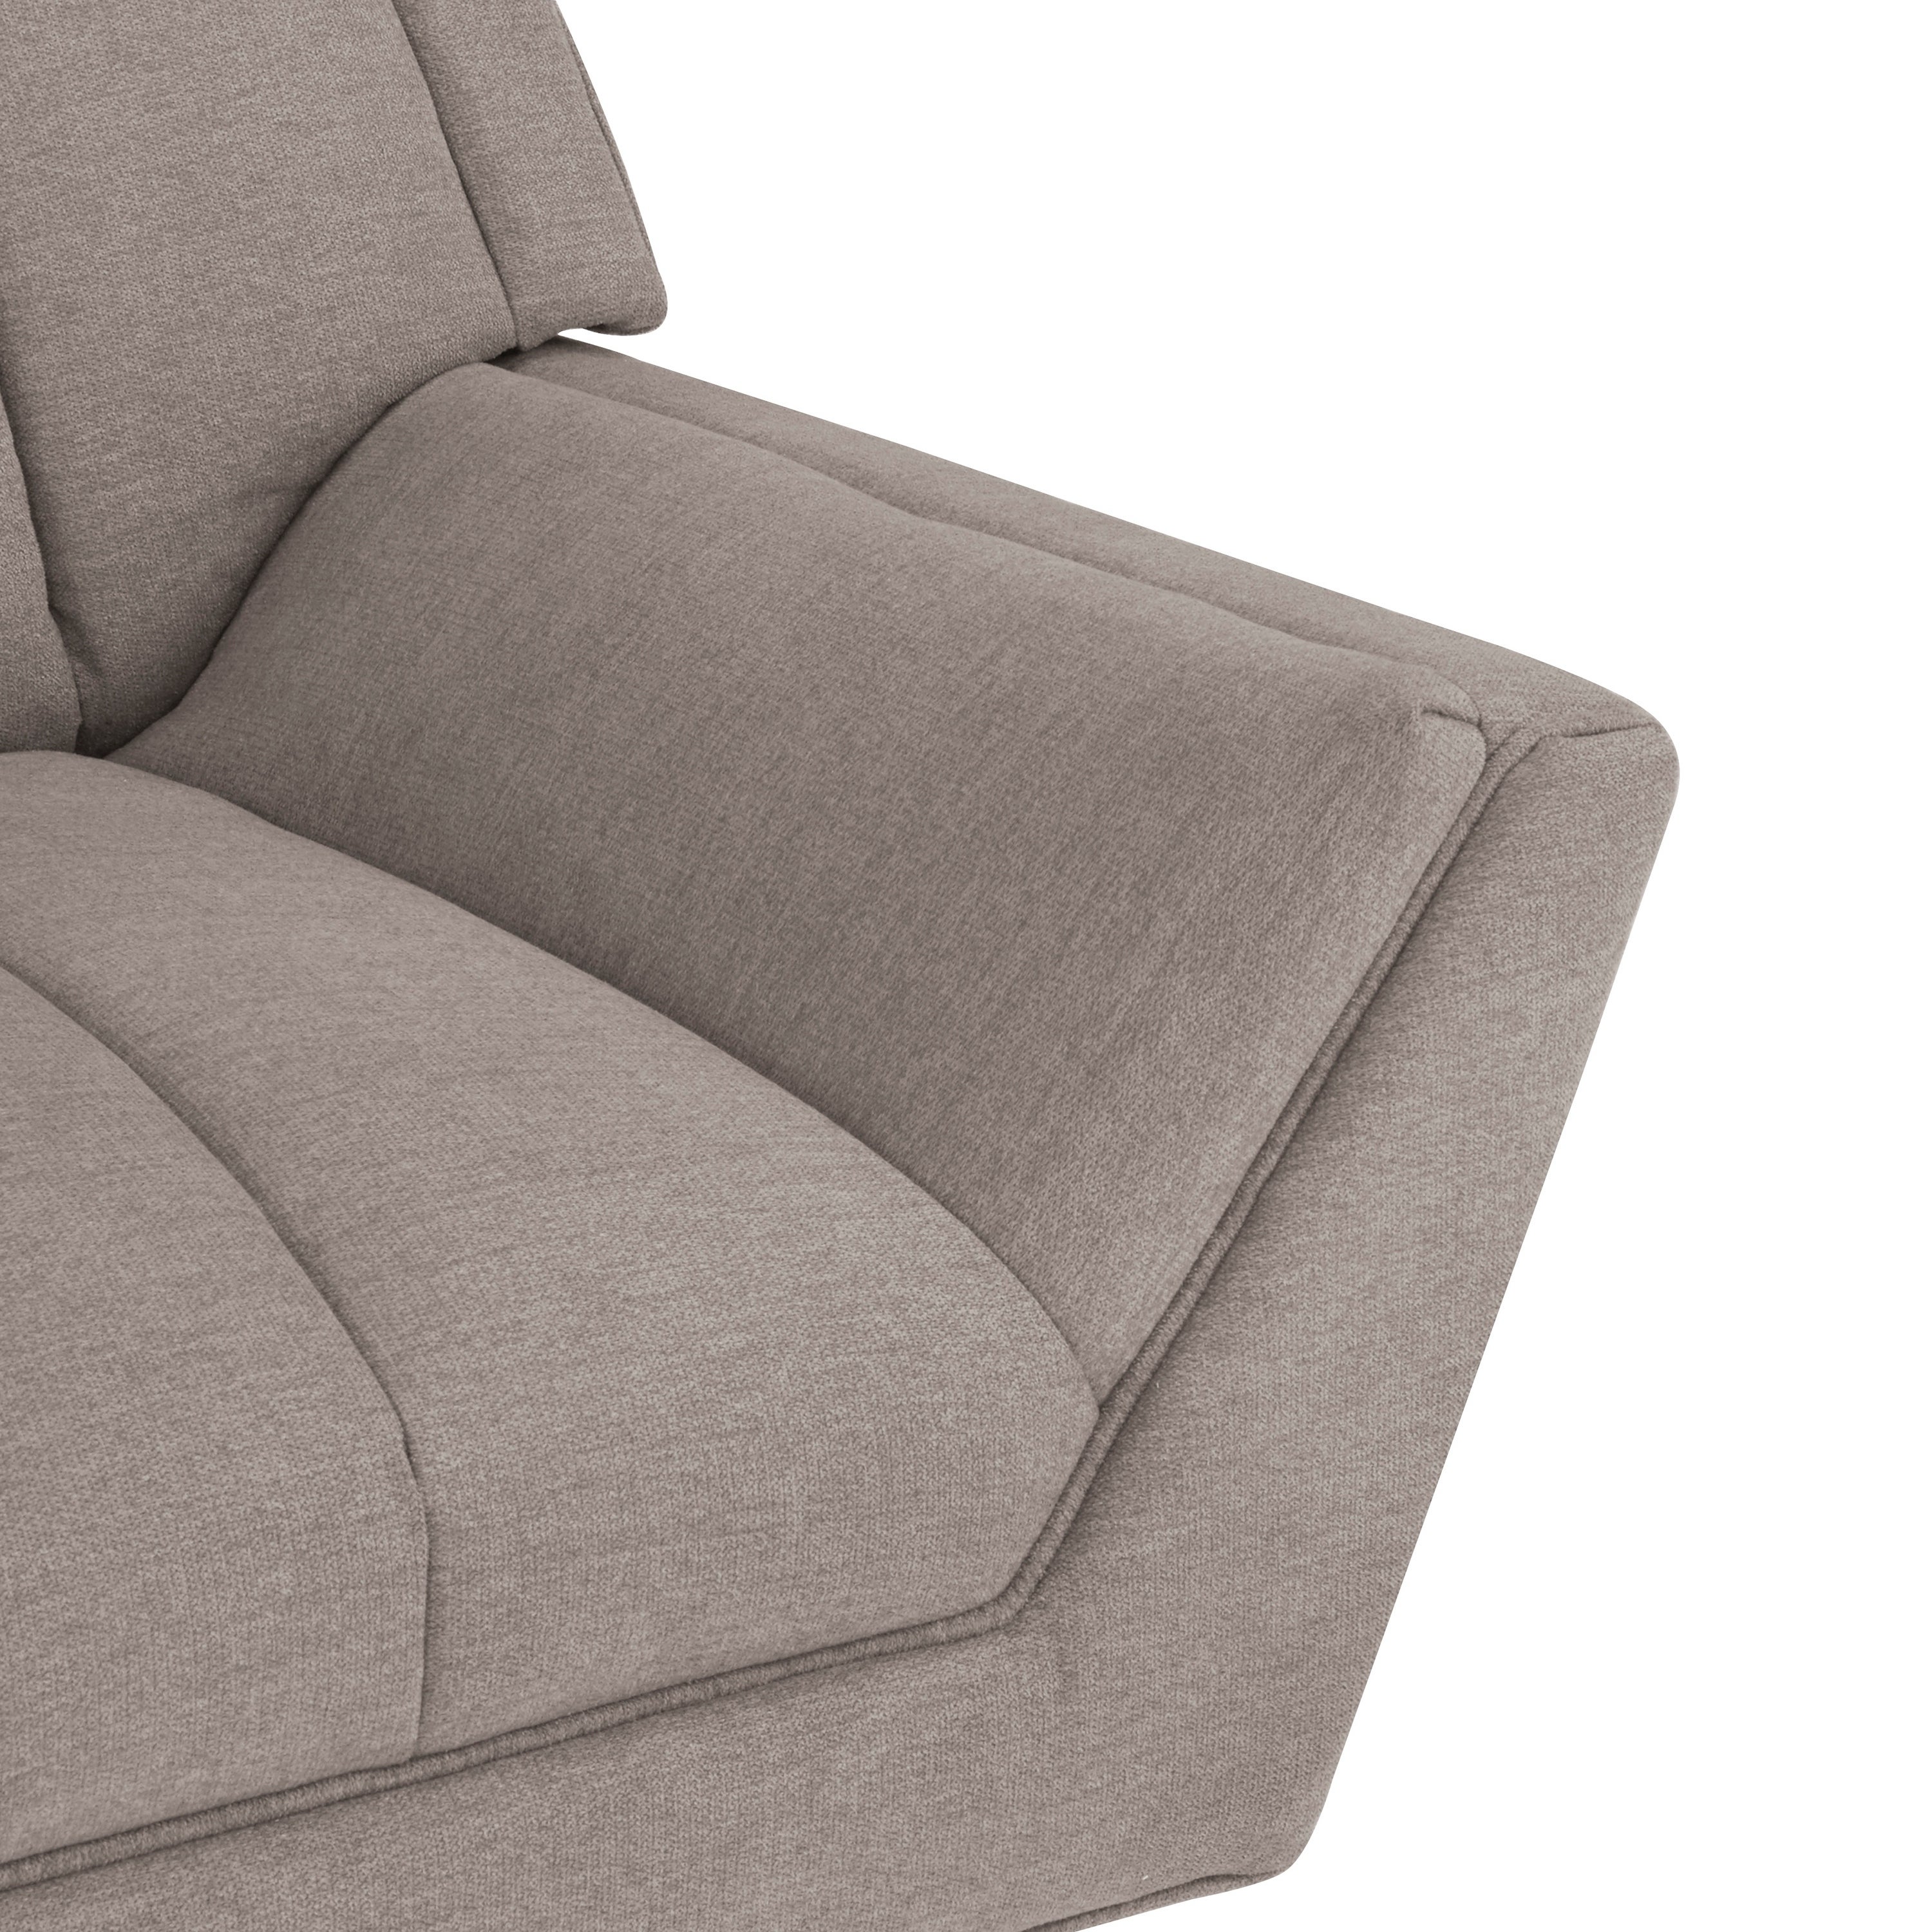 Green Sectional Sofa $150 - $205 by Kingbird Furniture Company 9